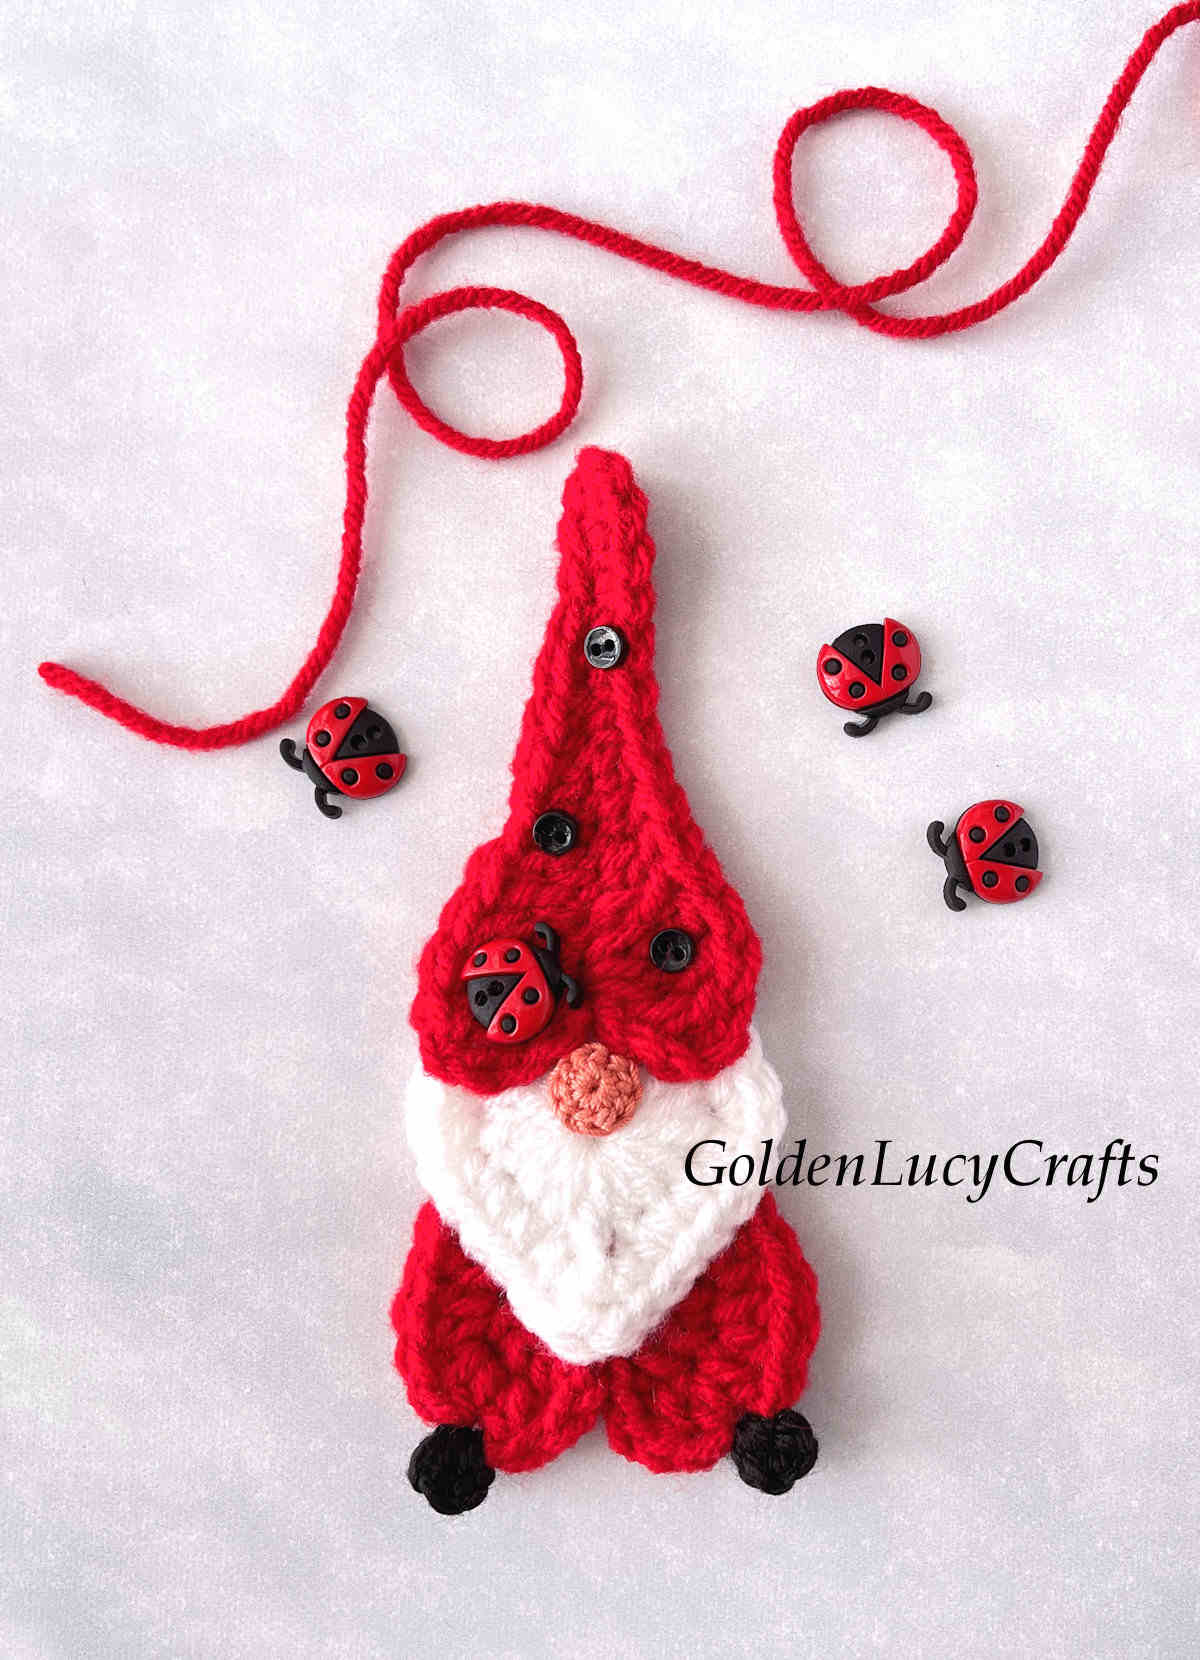 Crocheted ladybug gnome applique.